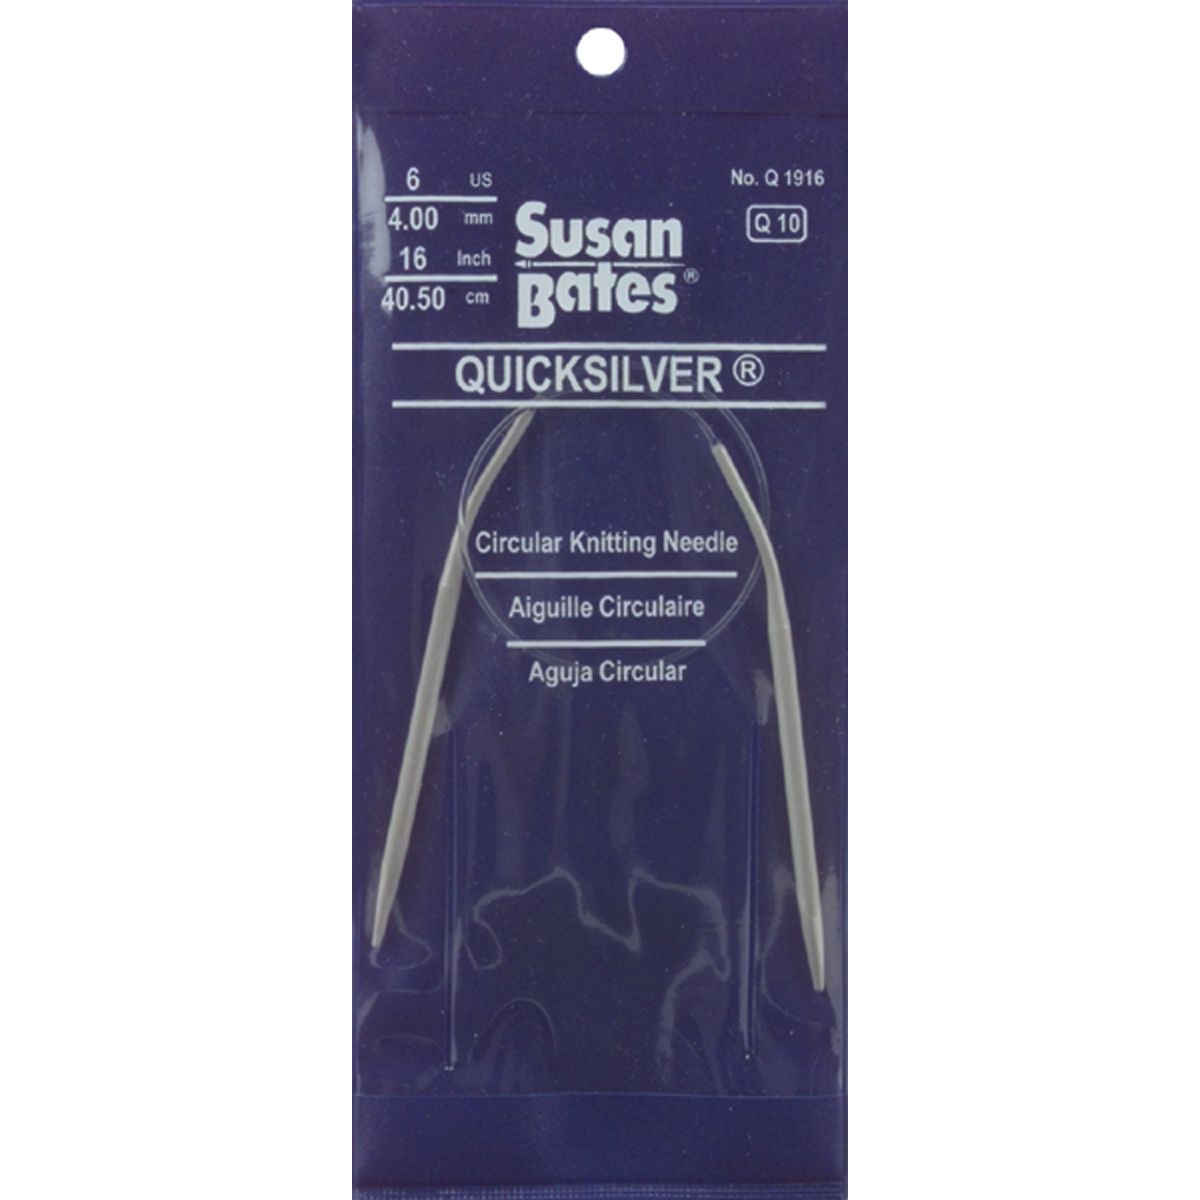 Susan Bates Quicksilver Circular Knitting Needle 36" Size 10